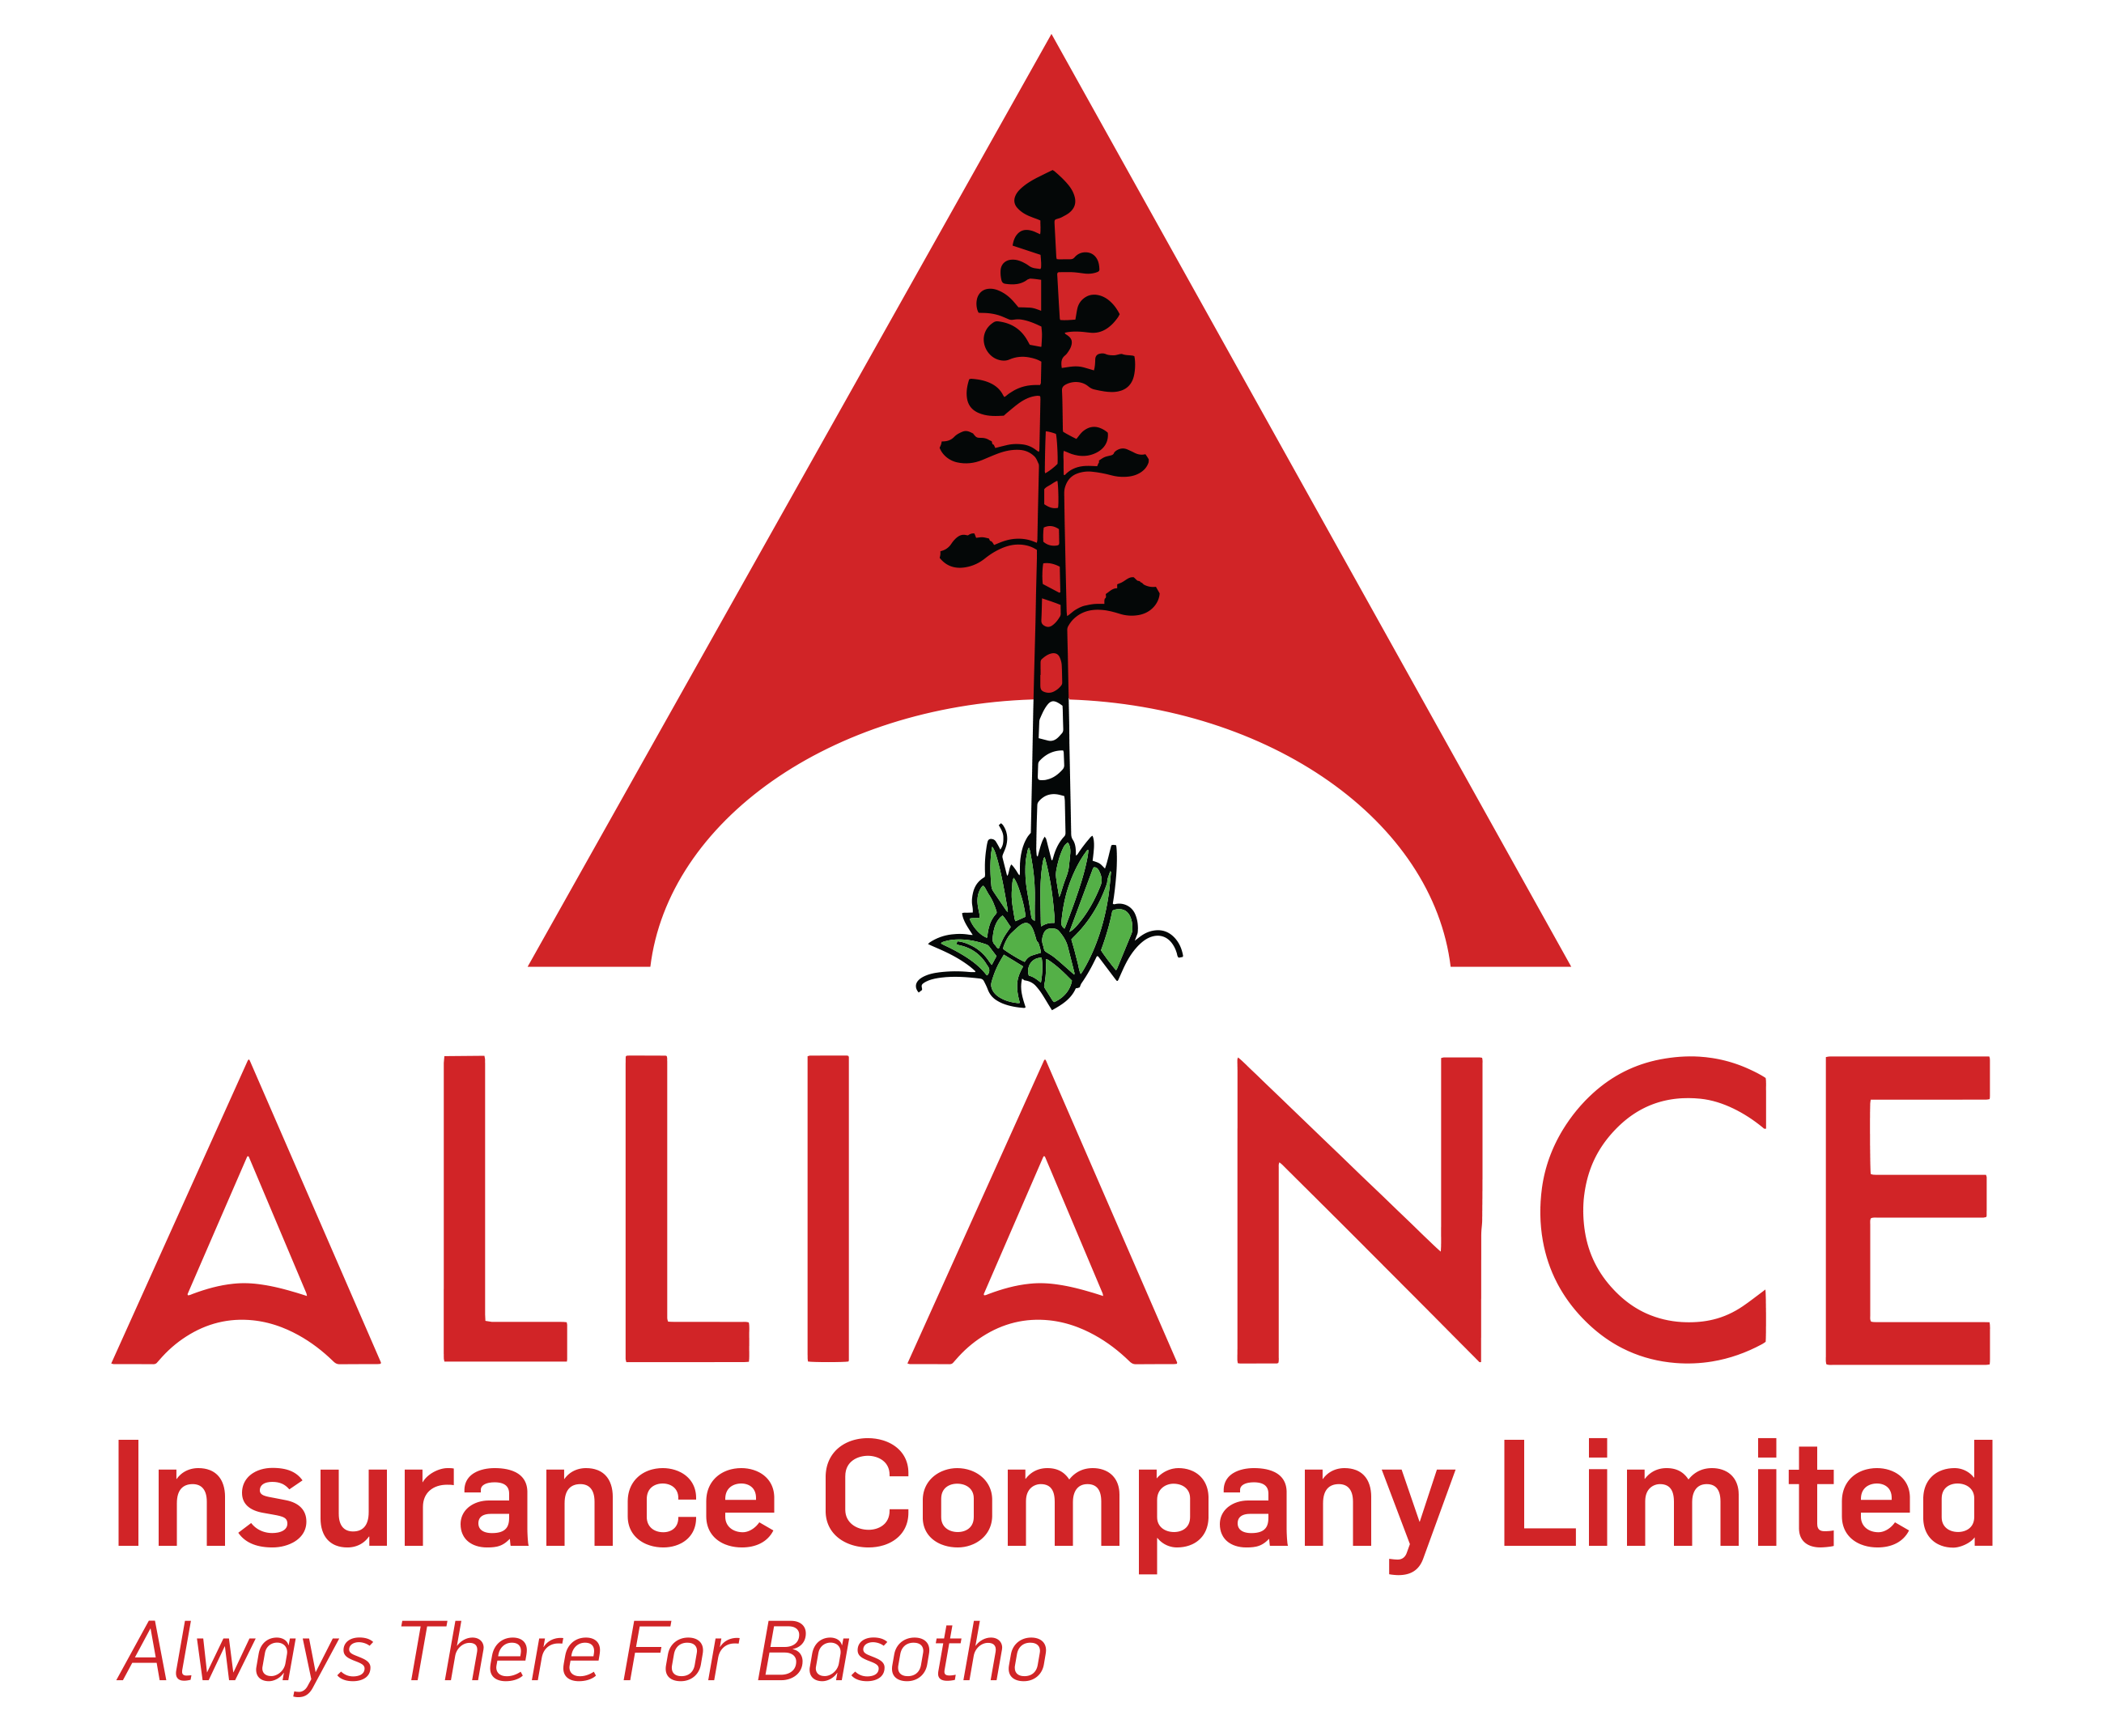 Alliance Insurance Company Limited